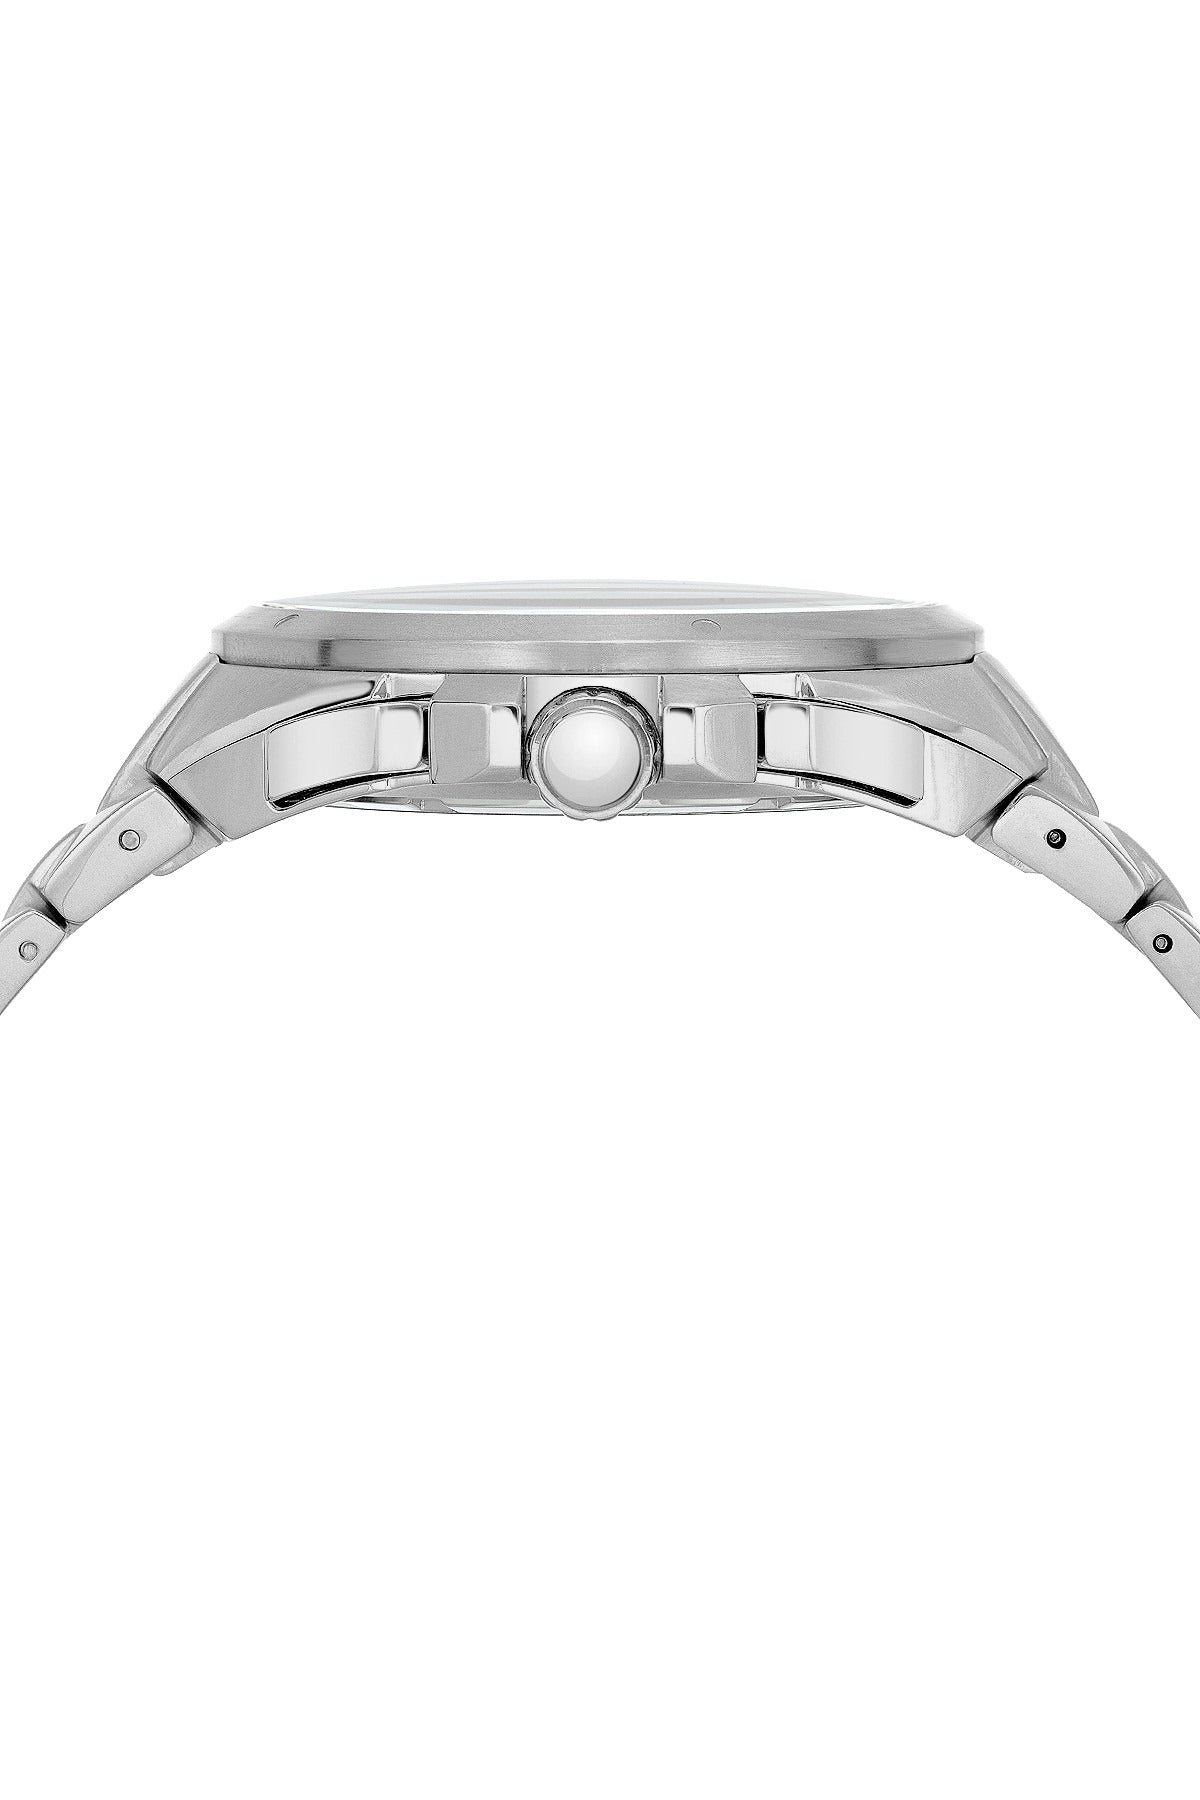 Porsamo Bleu Damien luxury chronograph men's stainless steel watch, silver 311ADAS